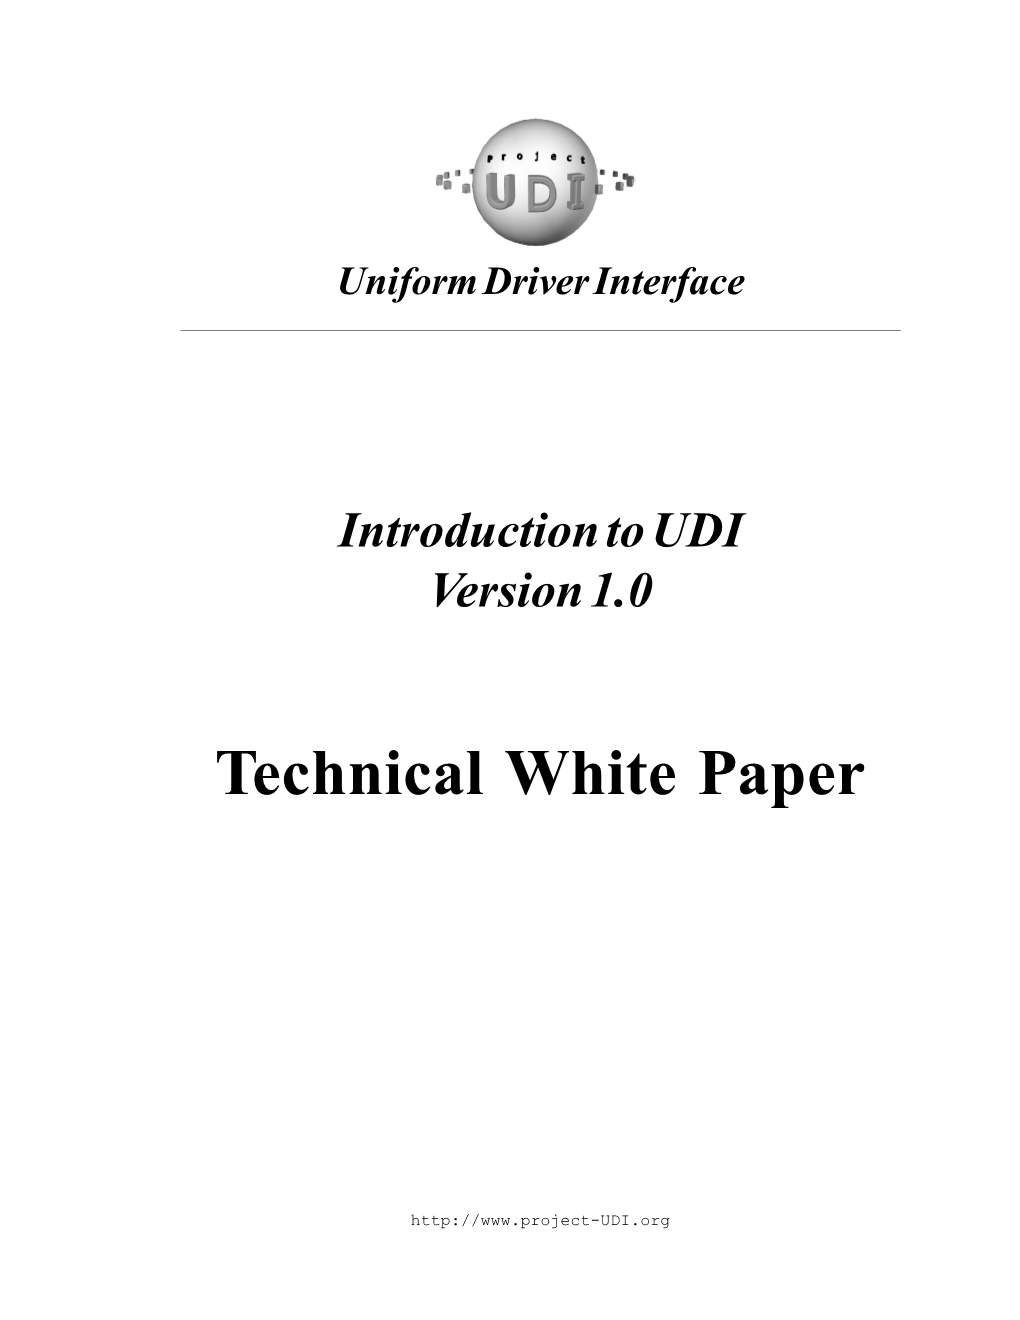 Technical White Paper